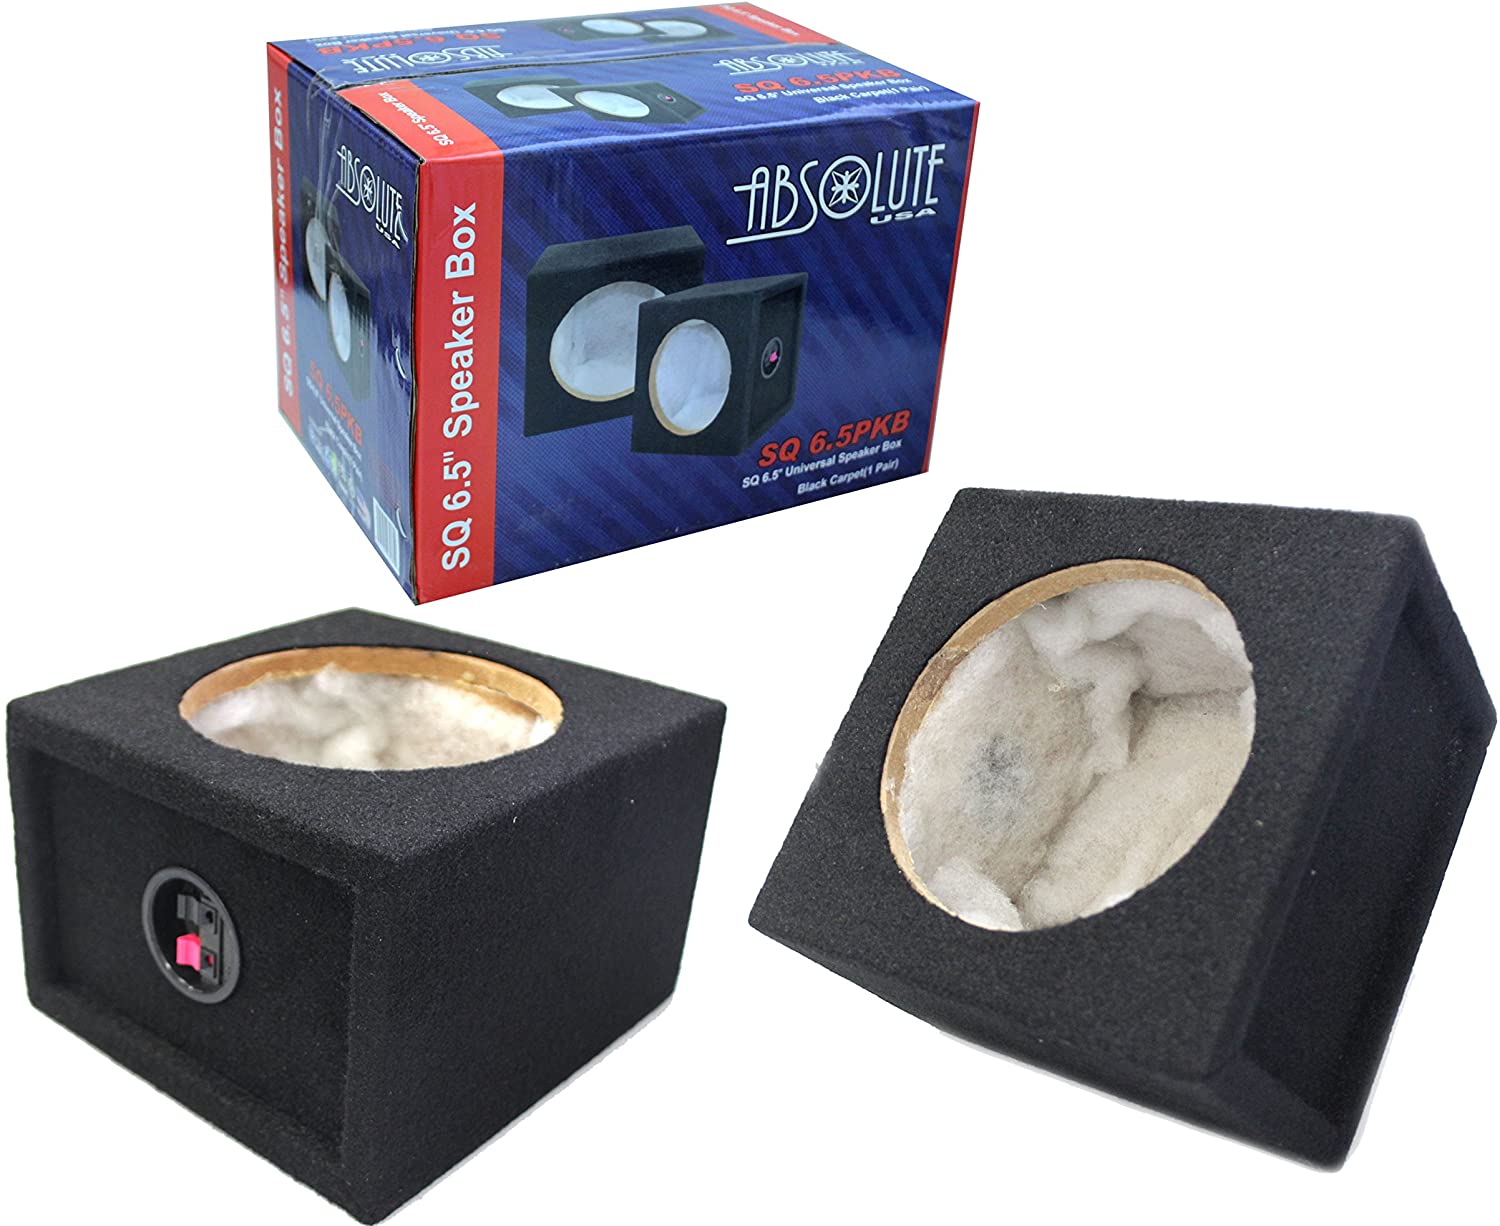 Absolute SQ6.5PKB 6.5" Speaker Enclosure Box <BR/>2 6.5" Square Box Speakers, Black Speaker Terminal enclosure